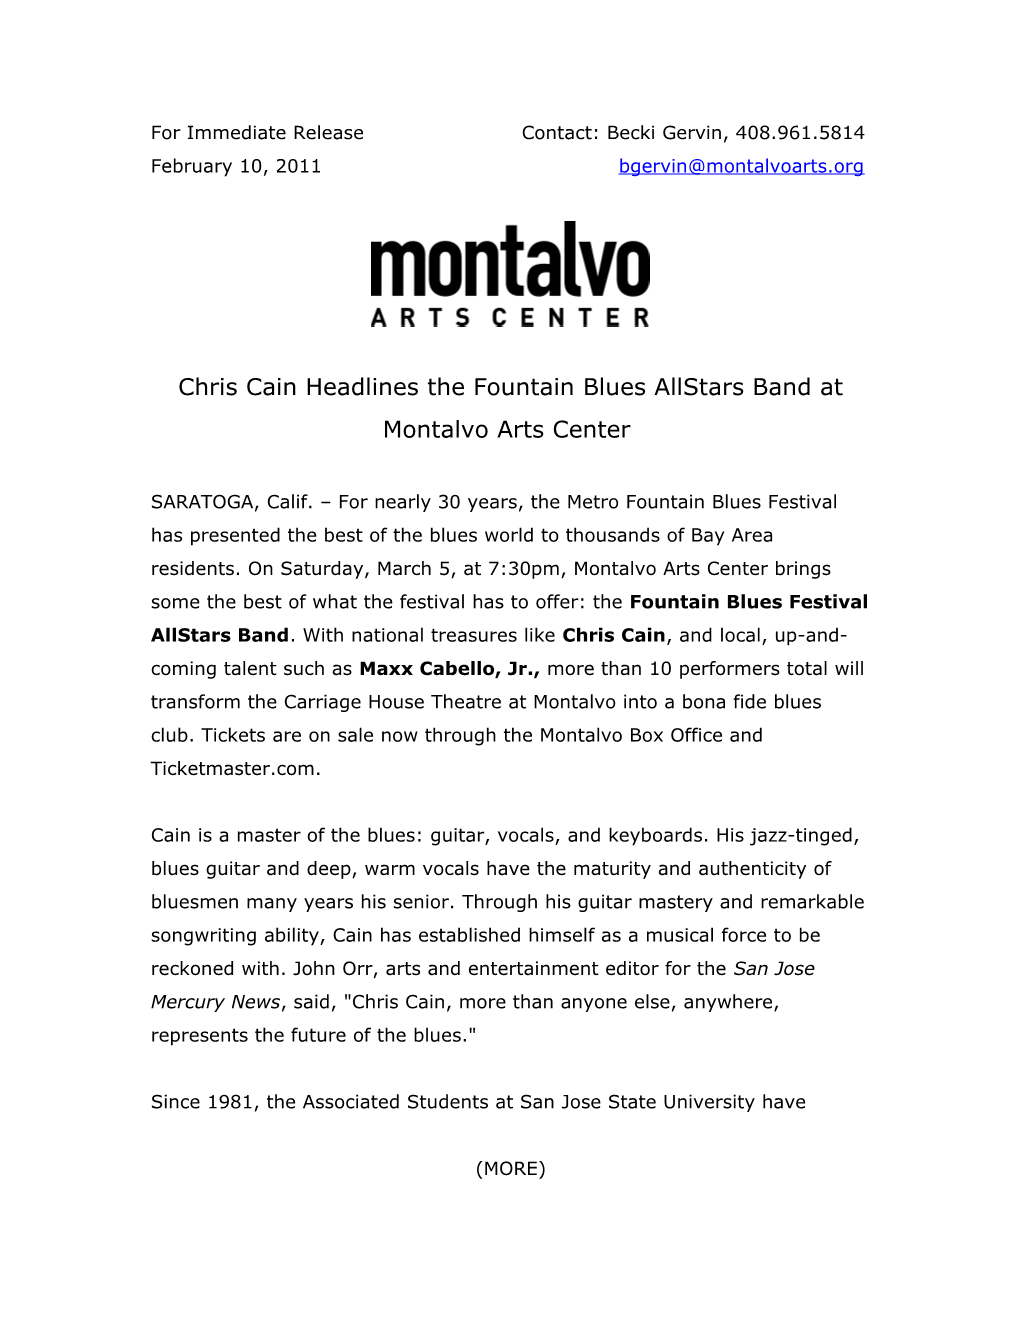 Chris Cain Headlines the Fountain Blues Allstars Band at Montalvo Arts Center